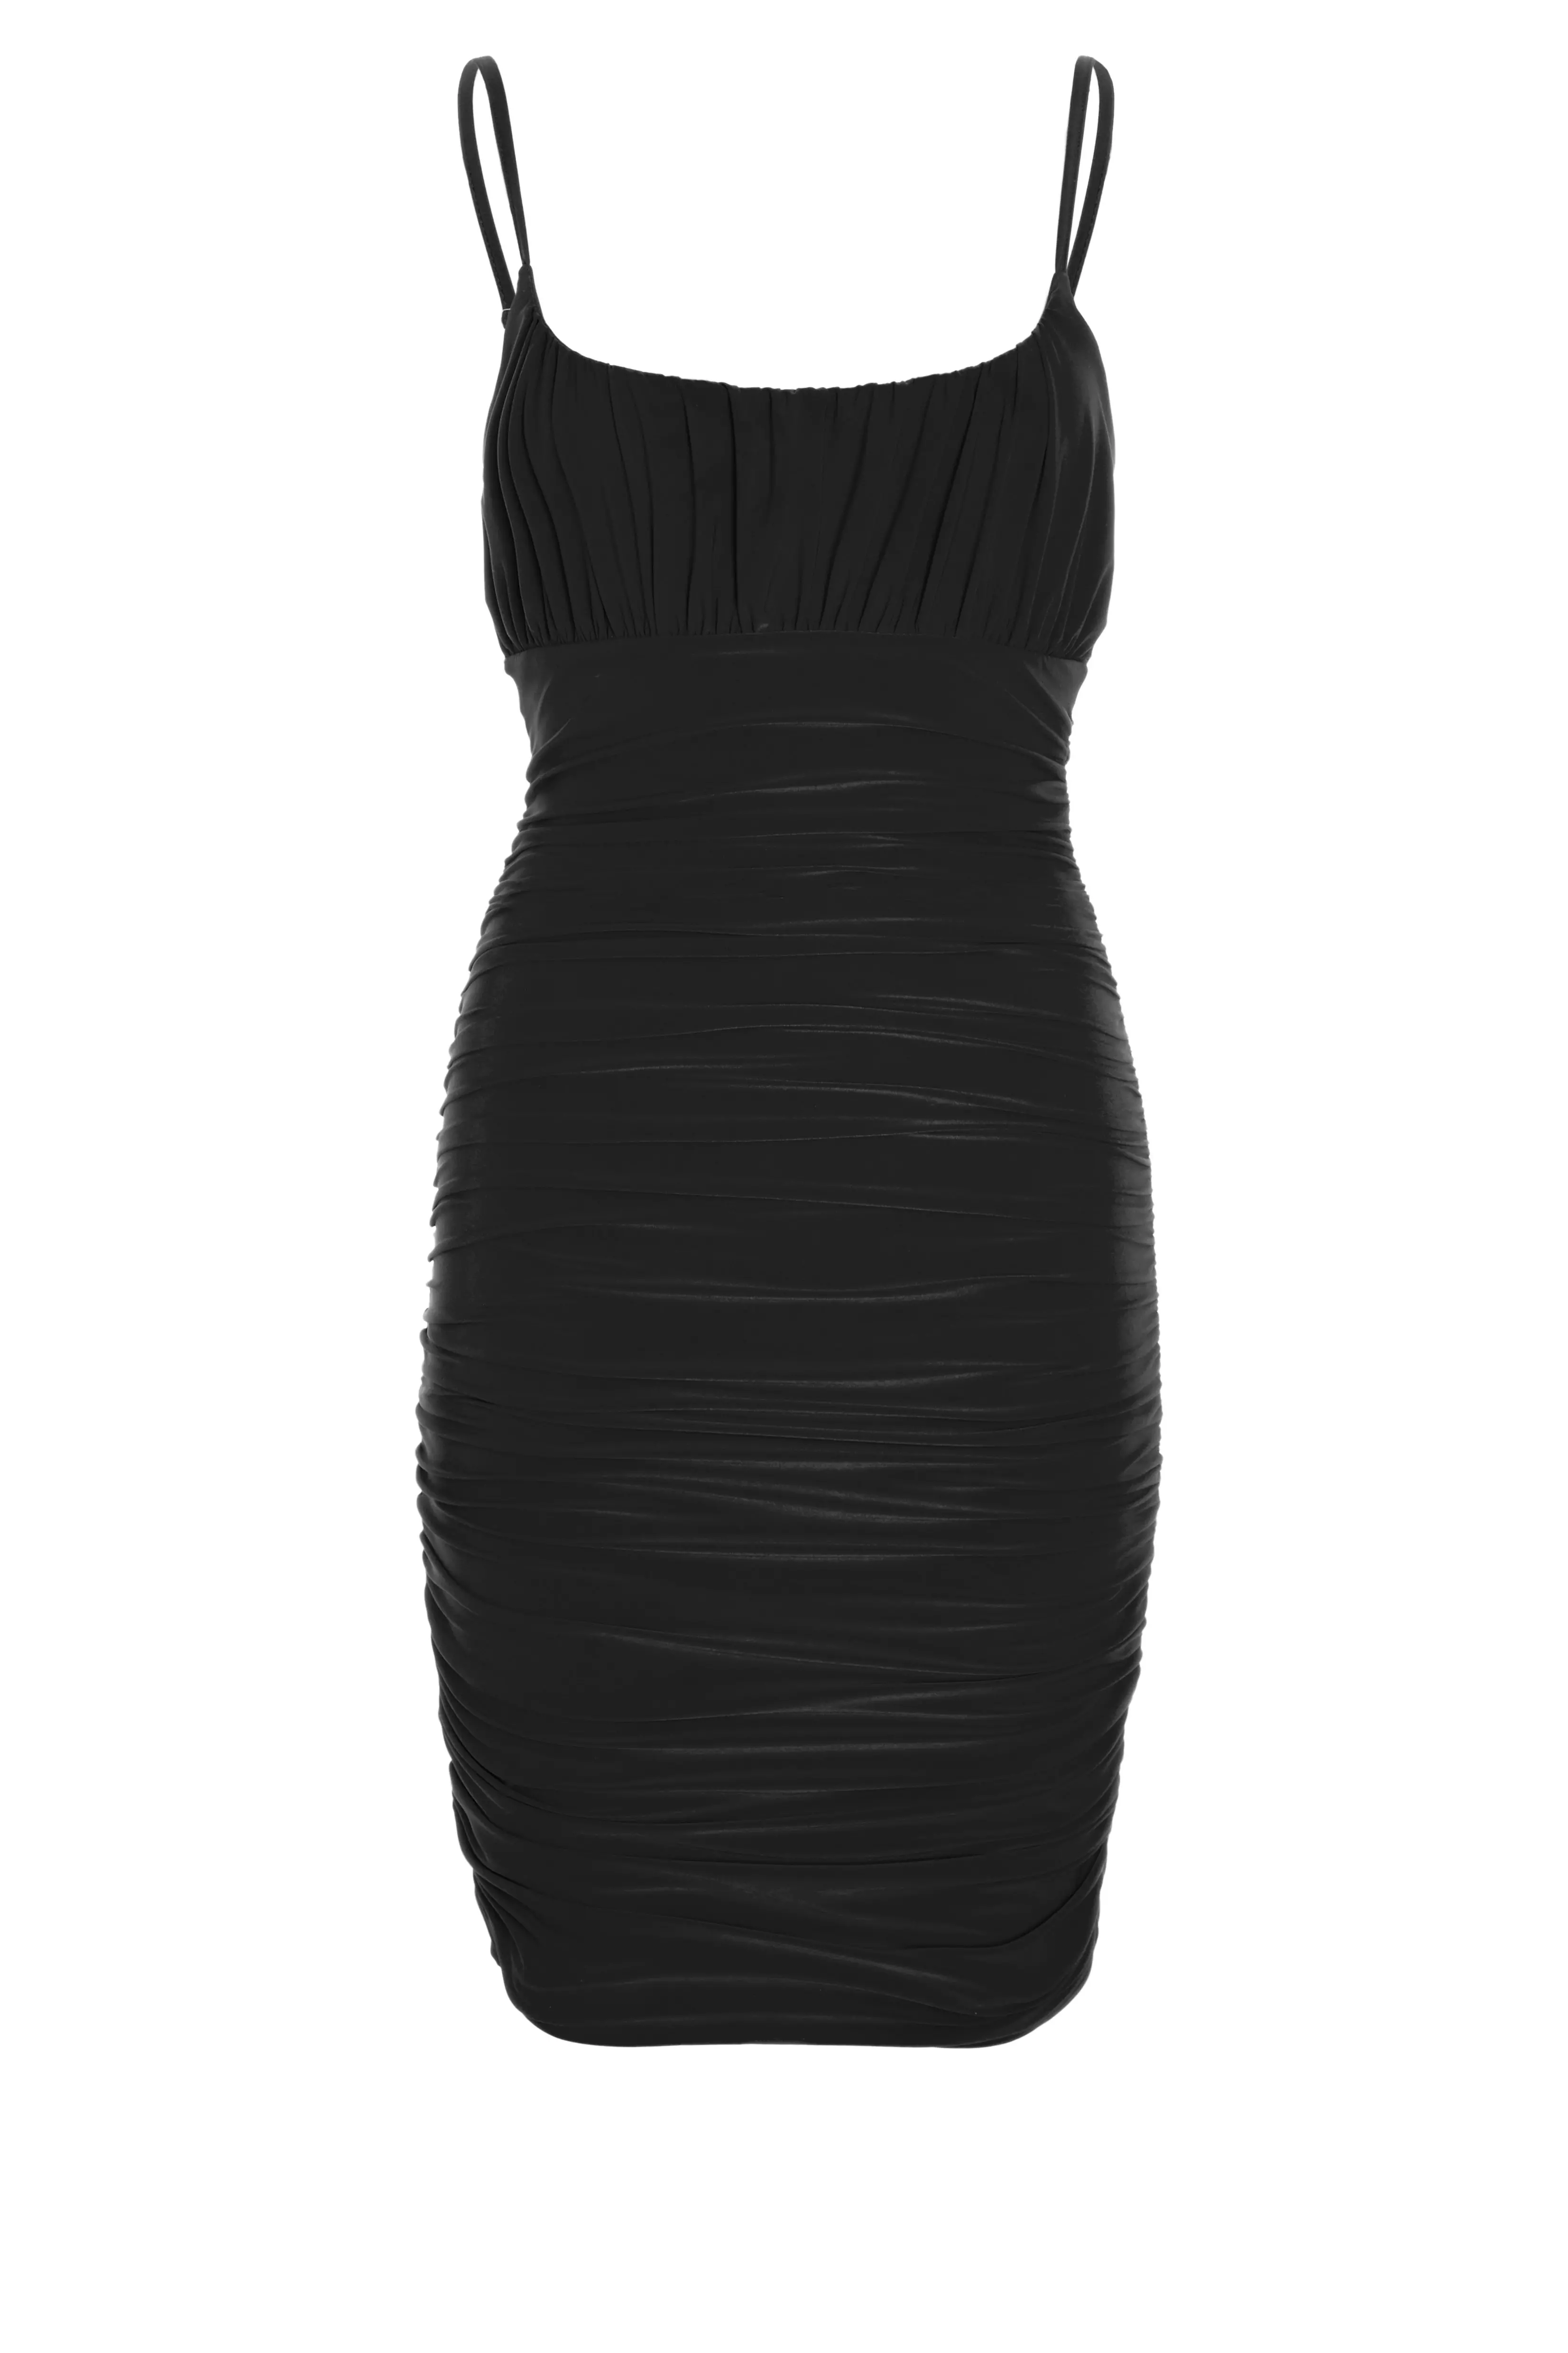 Black Ruched Bodycon Dress - QUIZ Clothing